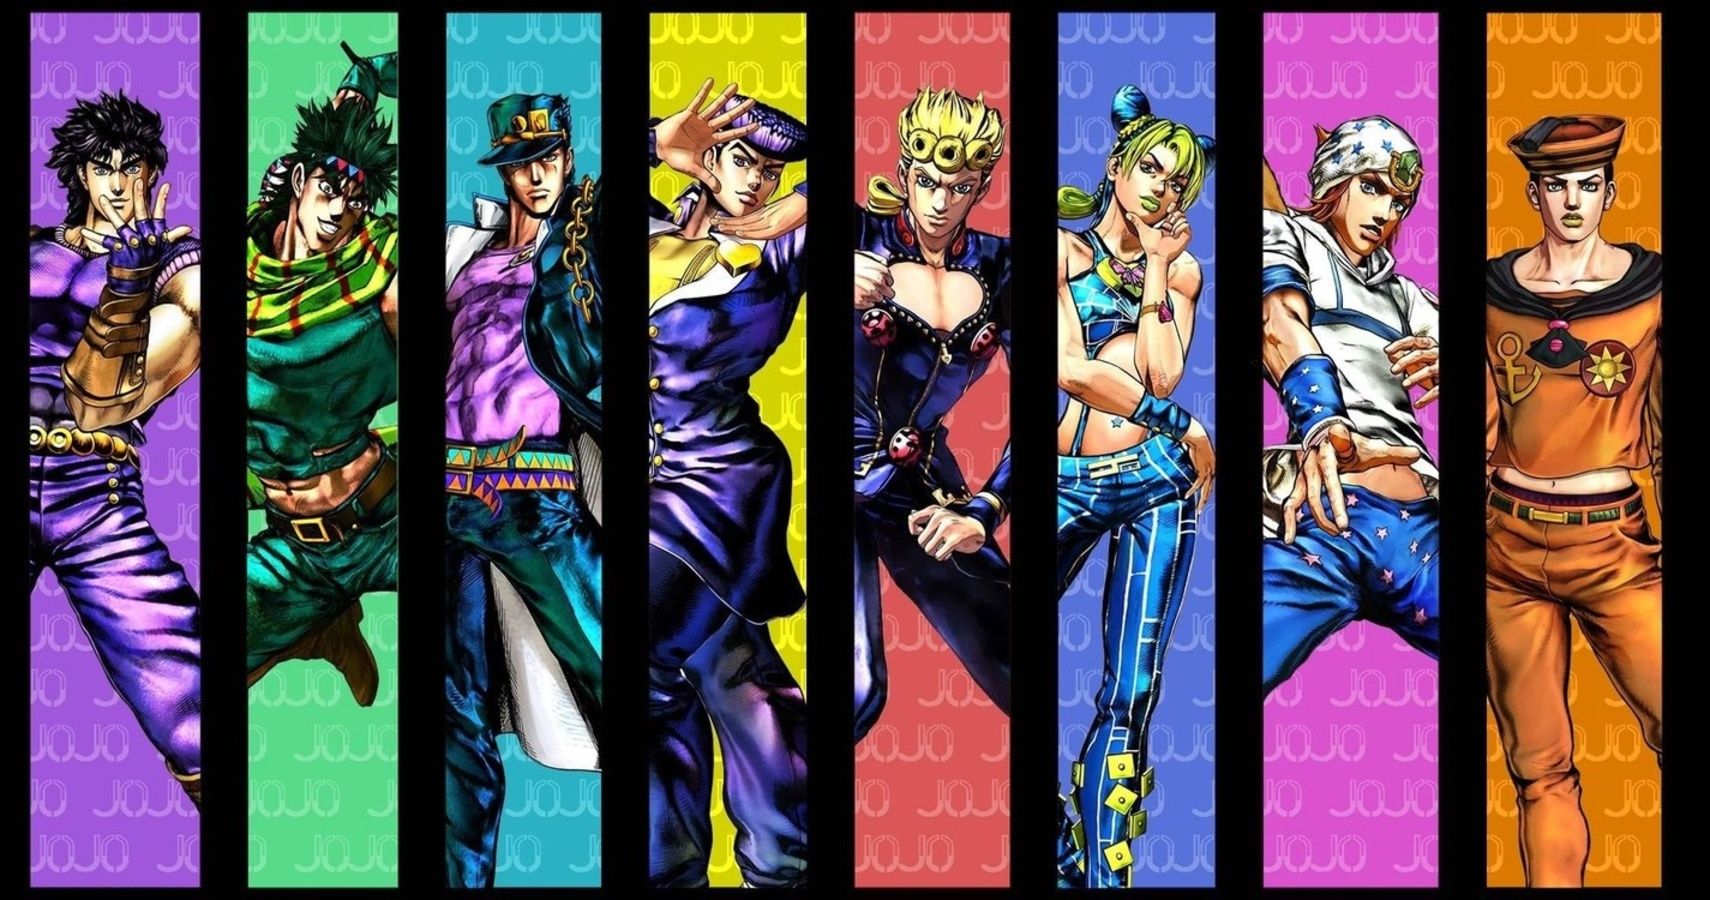 The eight protagonists of JoJo's Bizarre Adventure in order: Johnathan, Joseph, Jotaro, Josuke, Giorno, Jolyne, Johnny, and Josuke.  